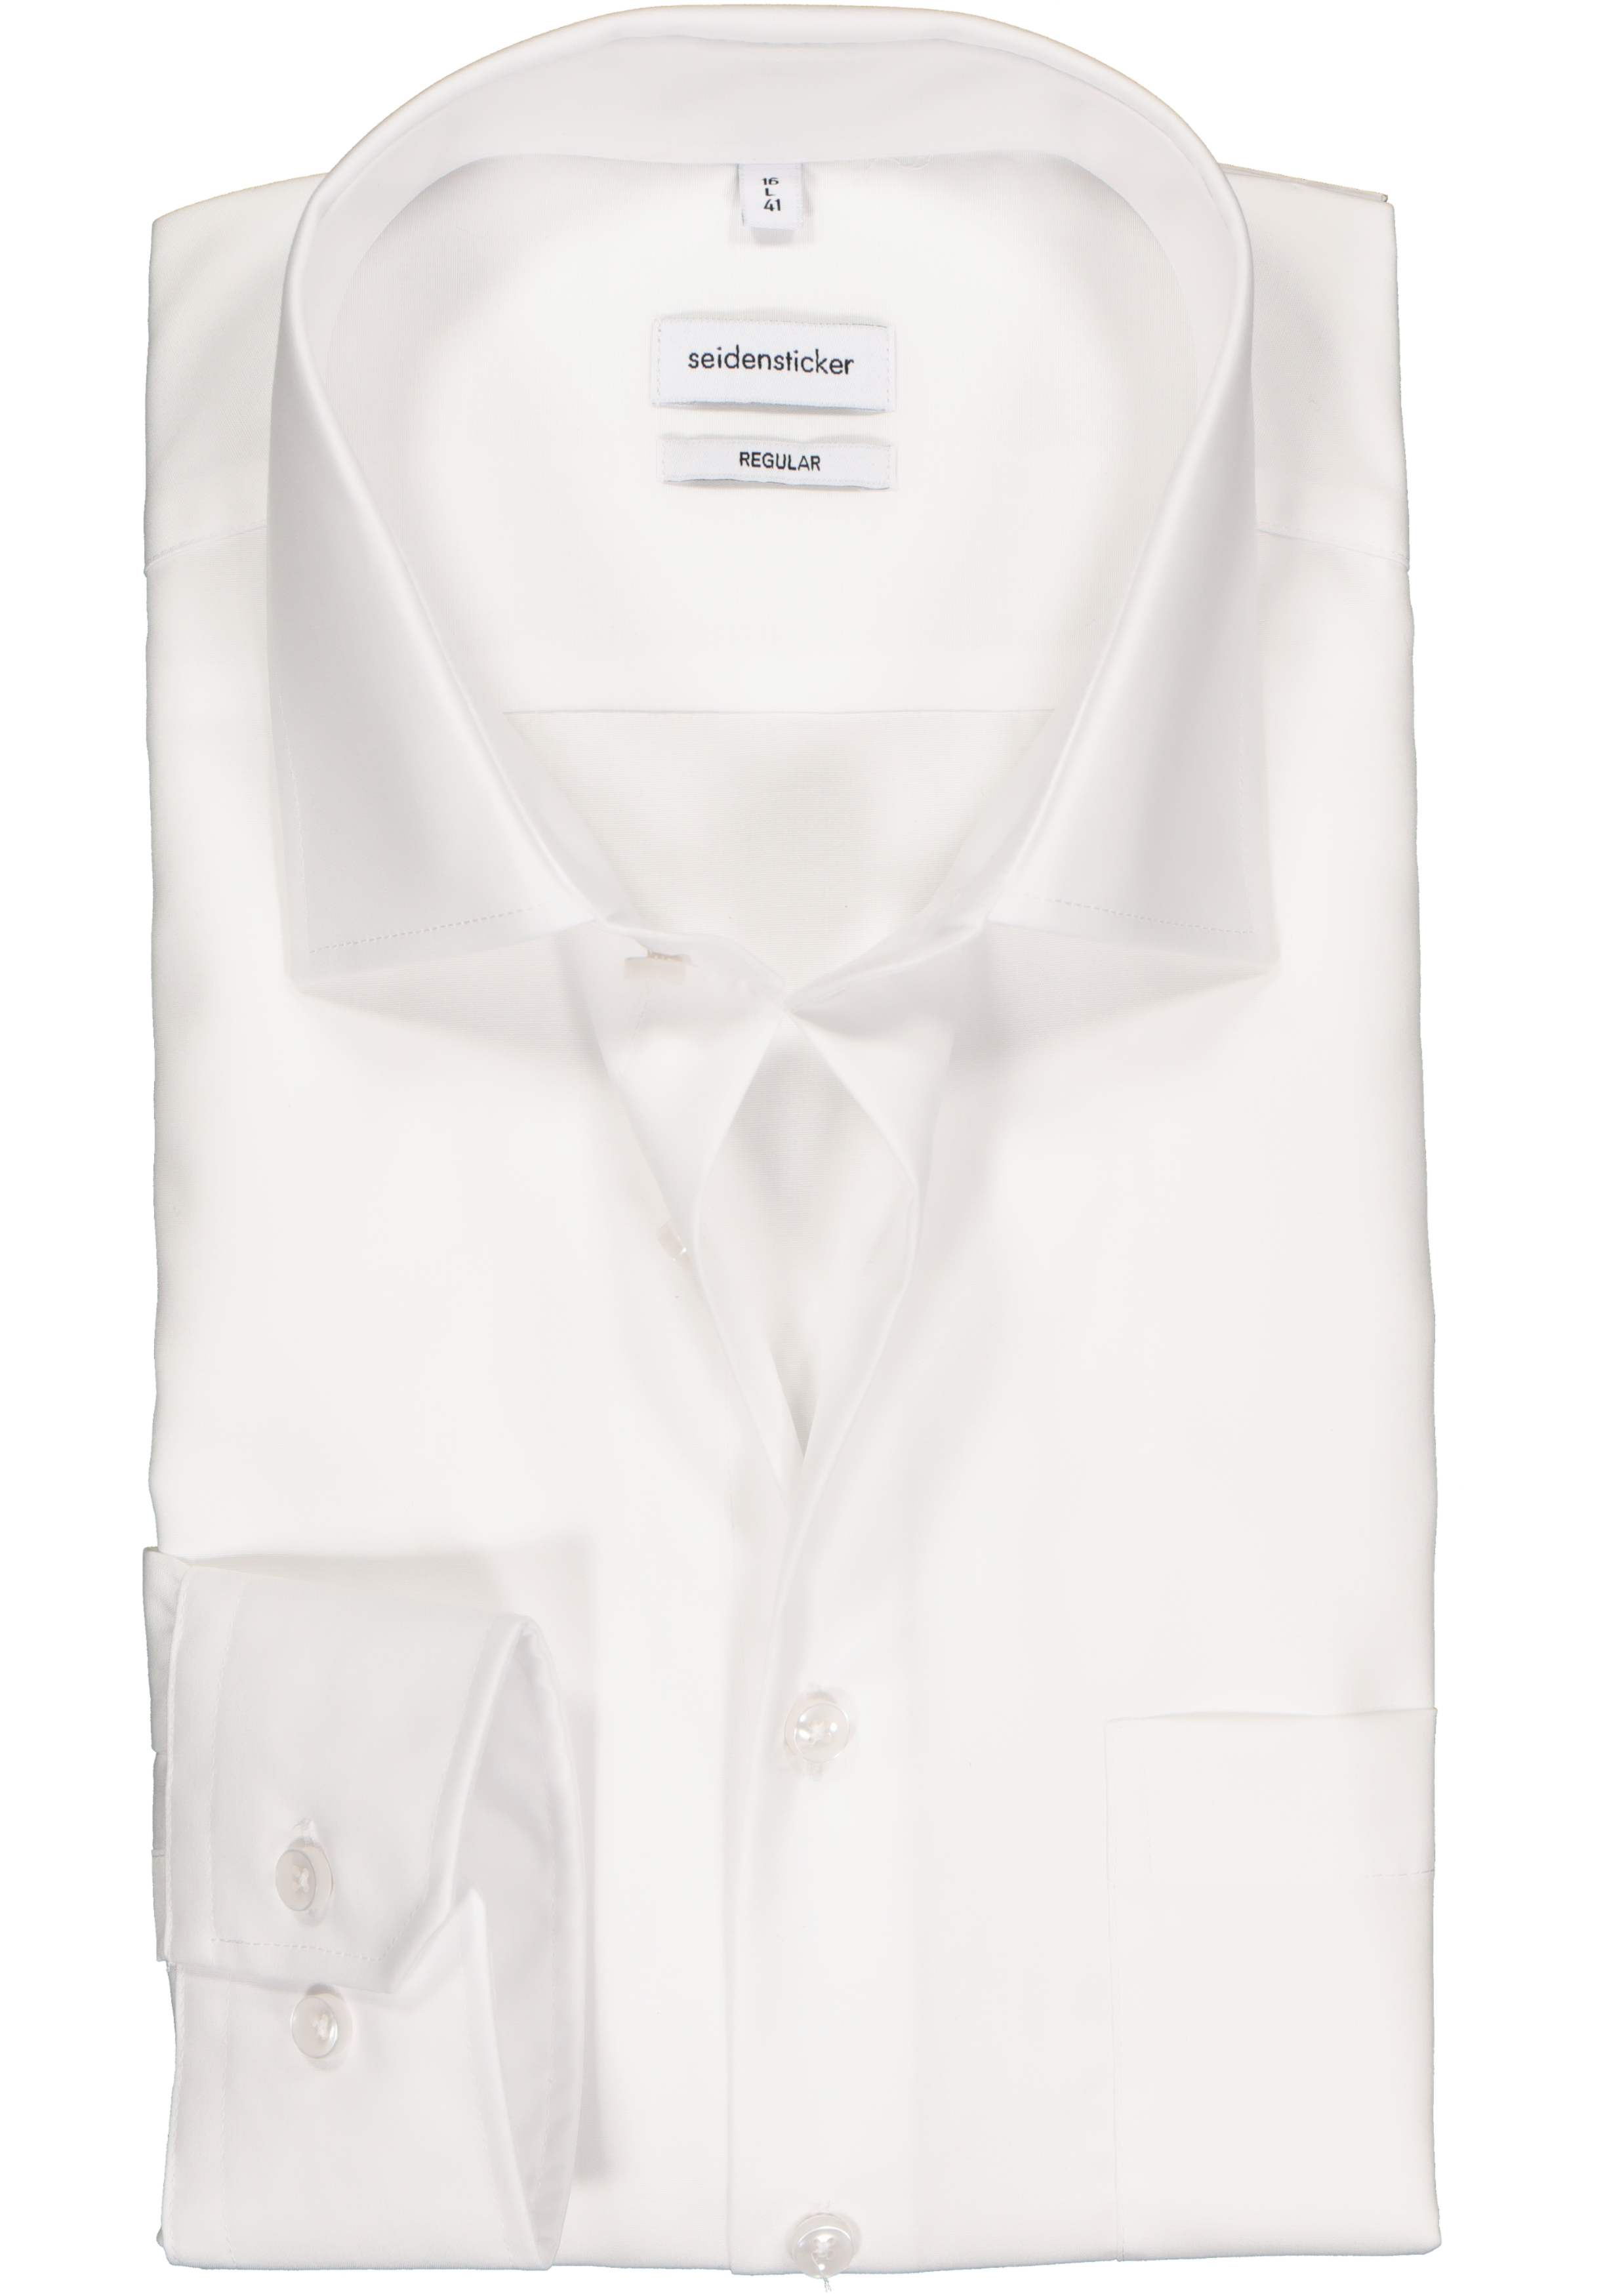 Seidensticker regular fit overhemd, mouwlengte 7, wit